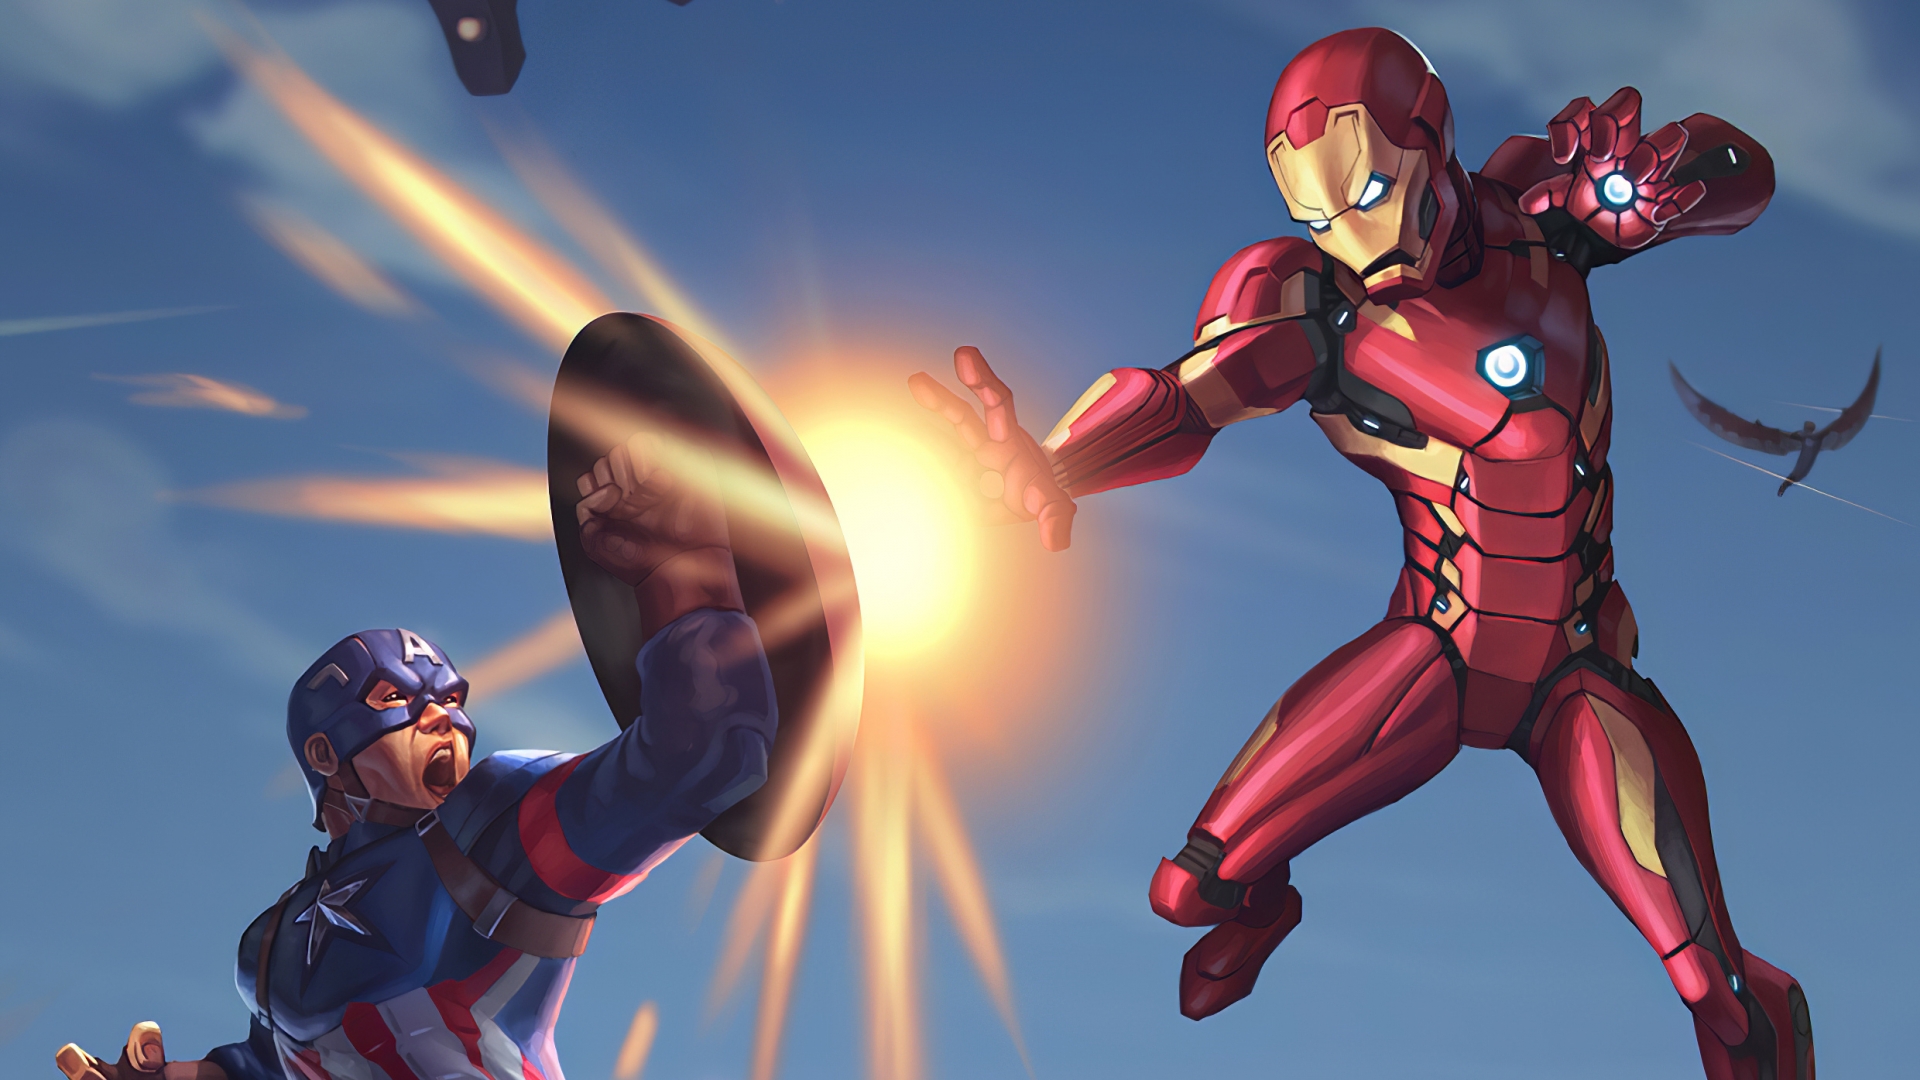 Captain America vs Iron Man Wallpaper ID:5242